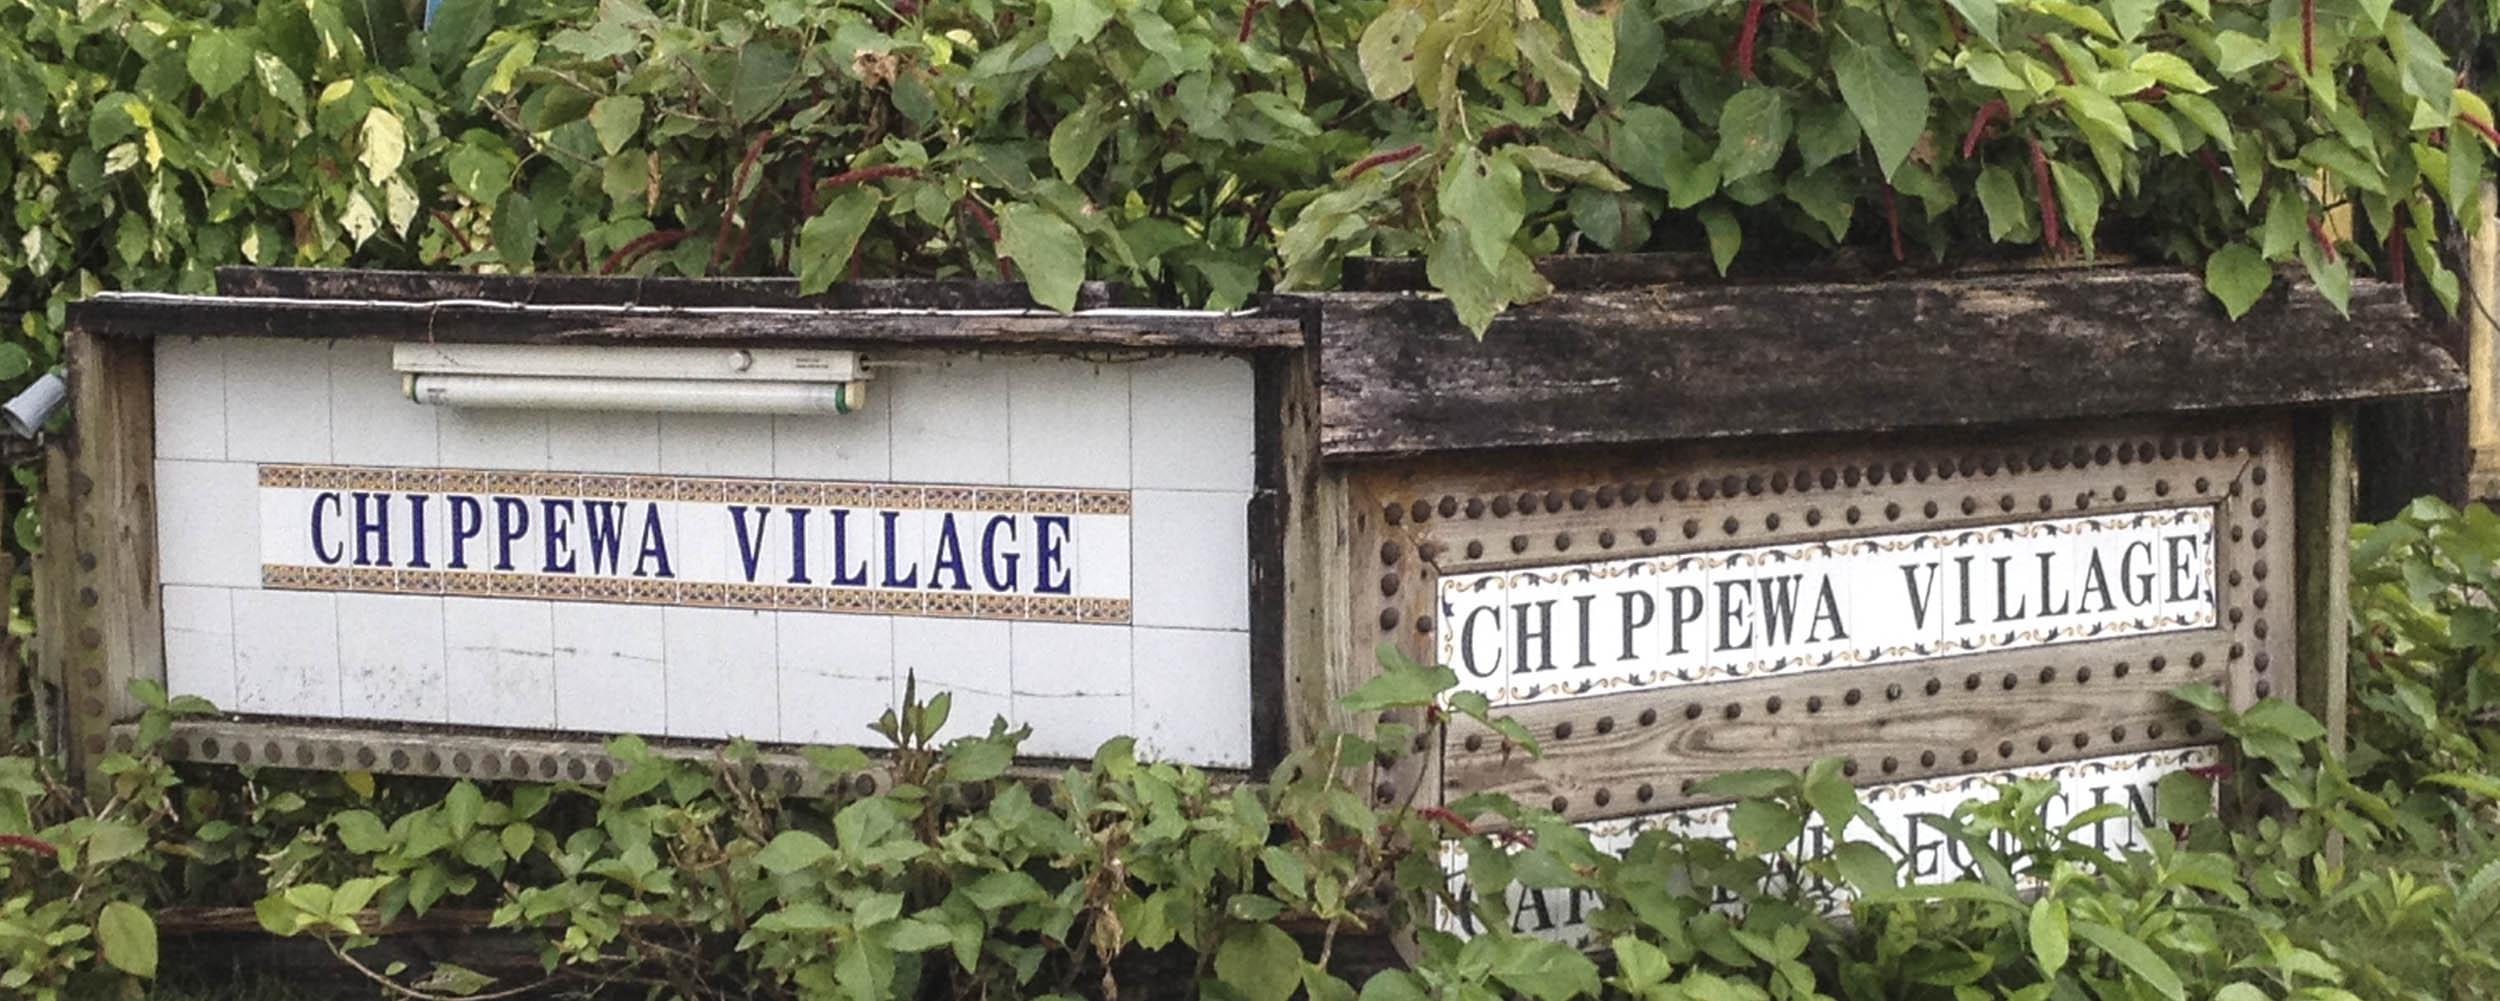 Chippewa Village - Negril Jamaica